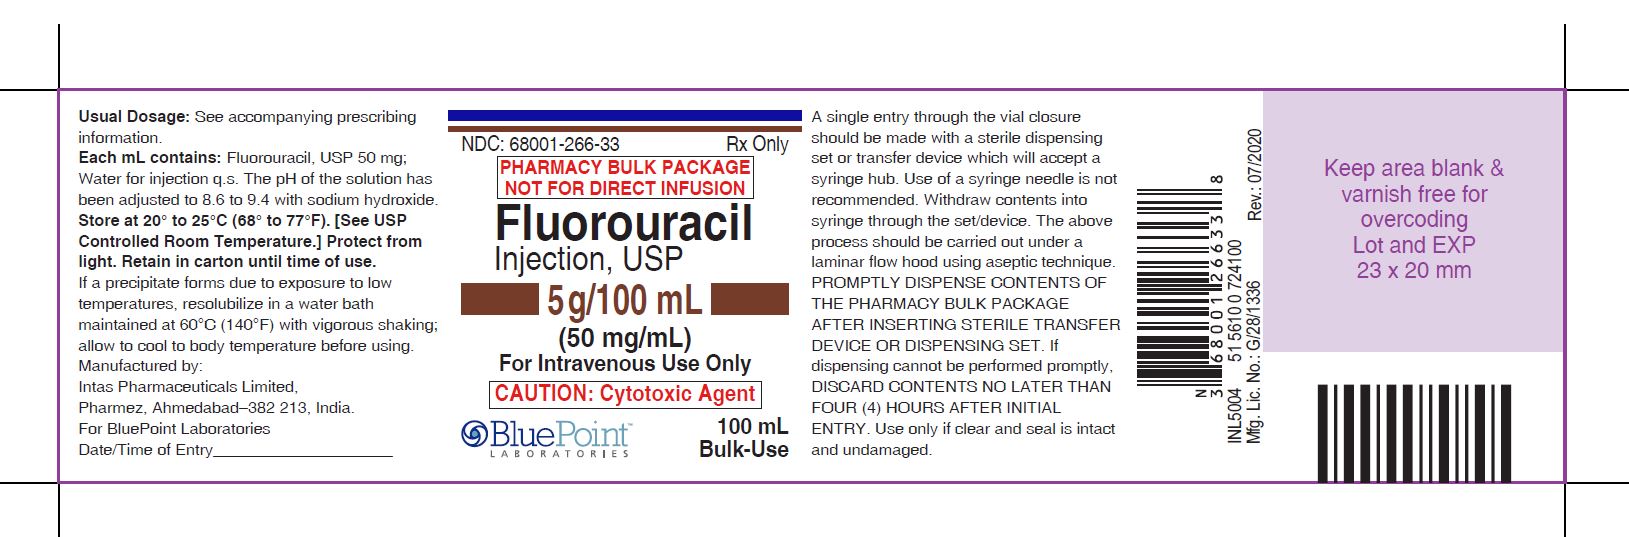 Fluorouracil Label 5g/100mL